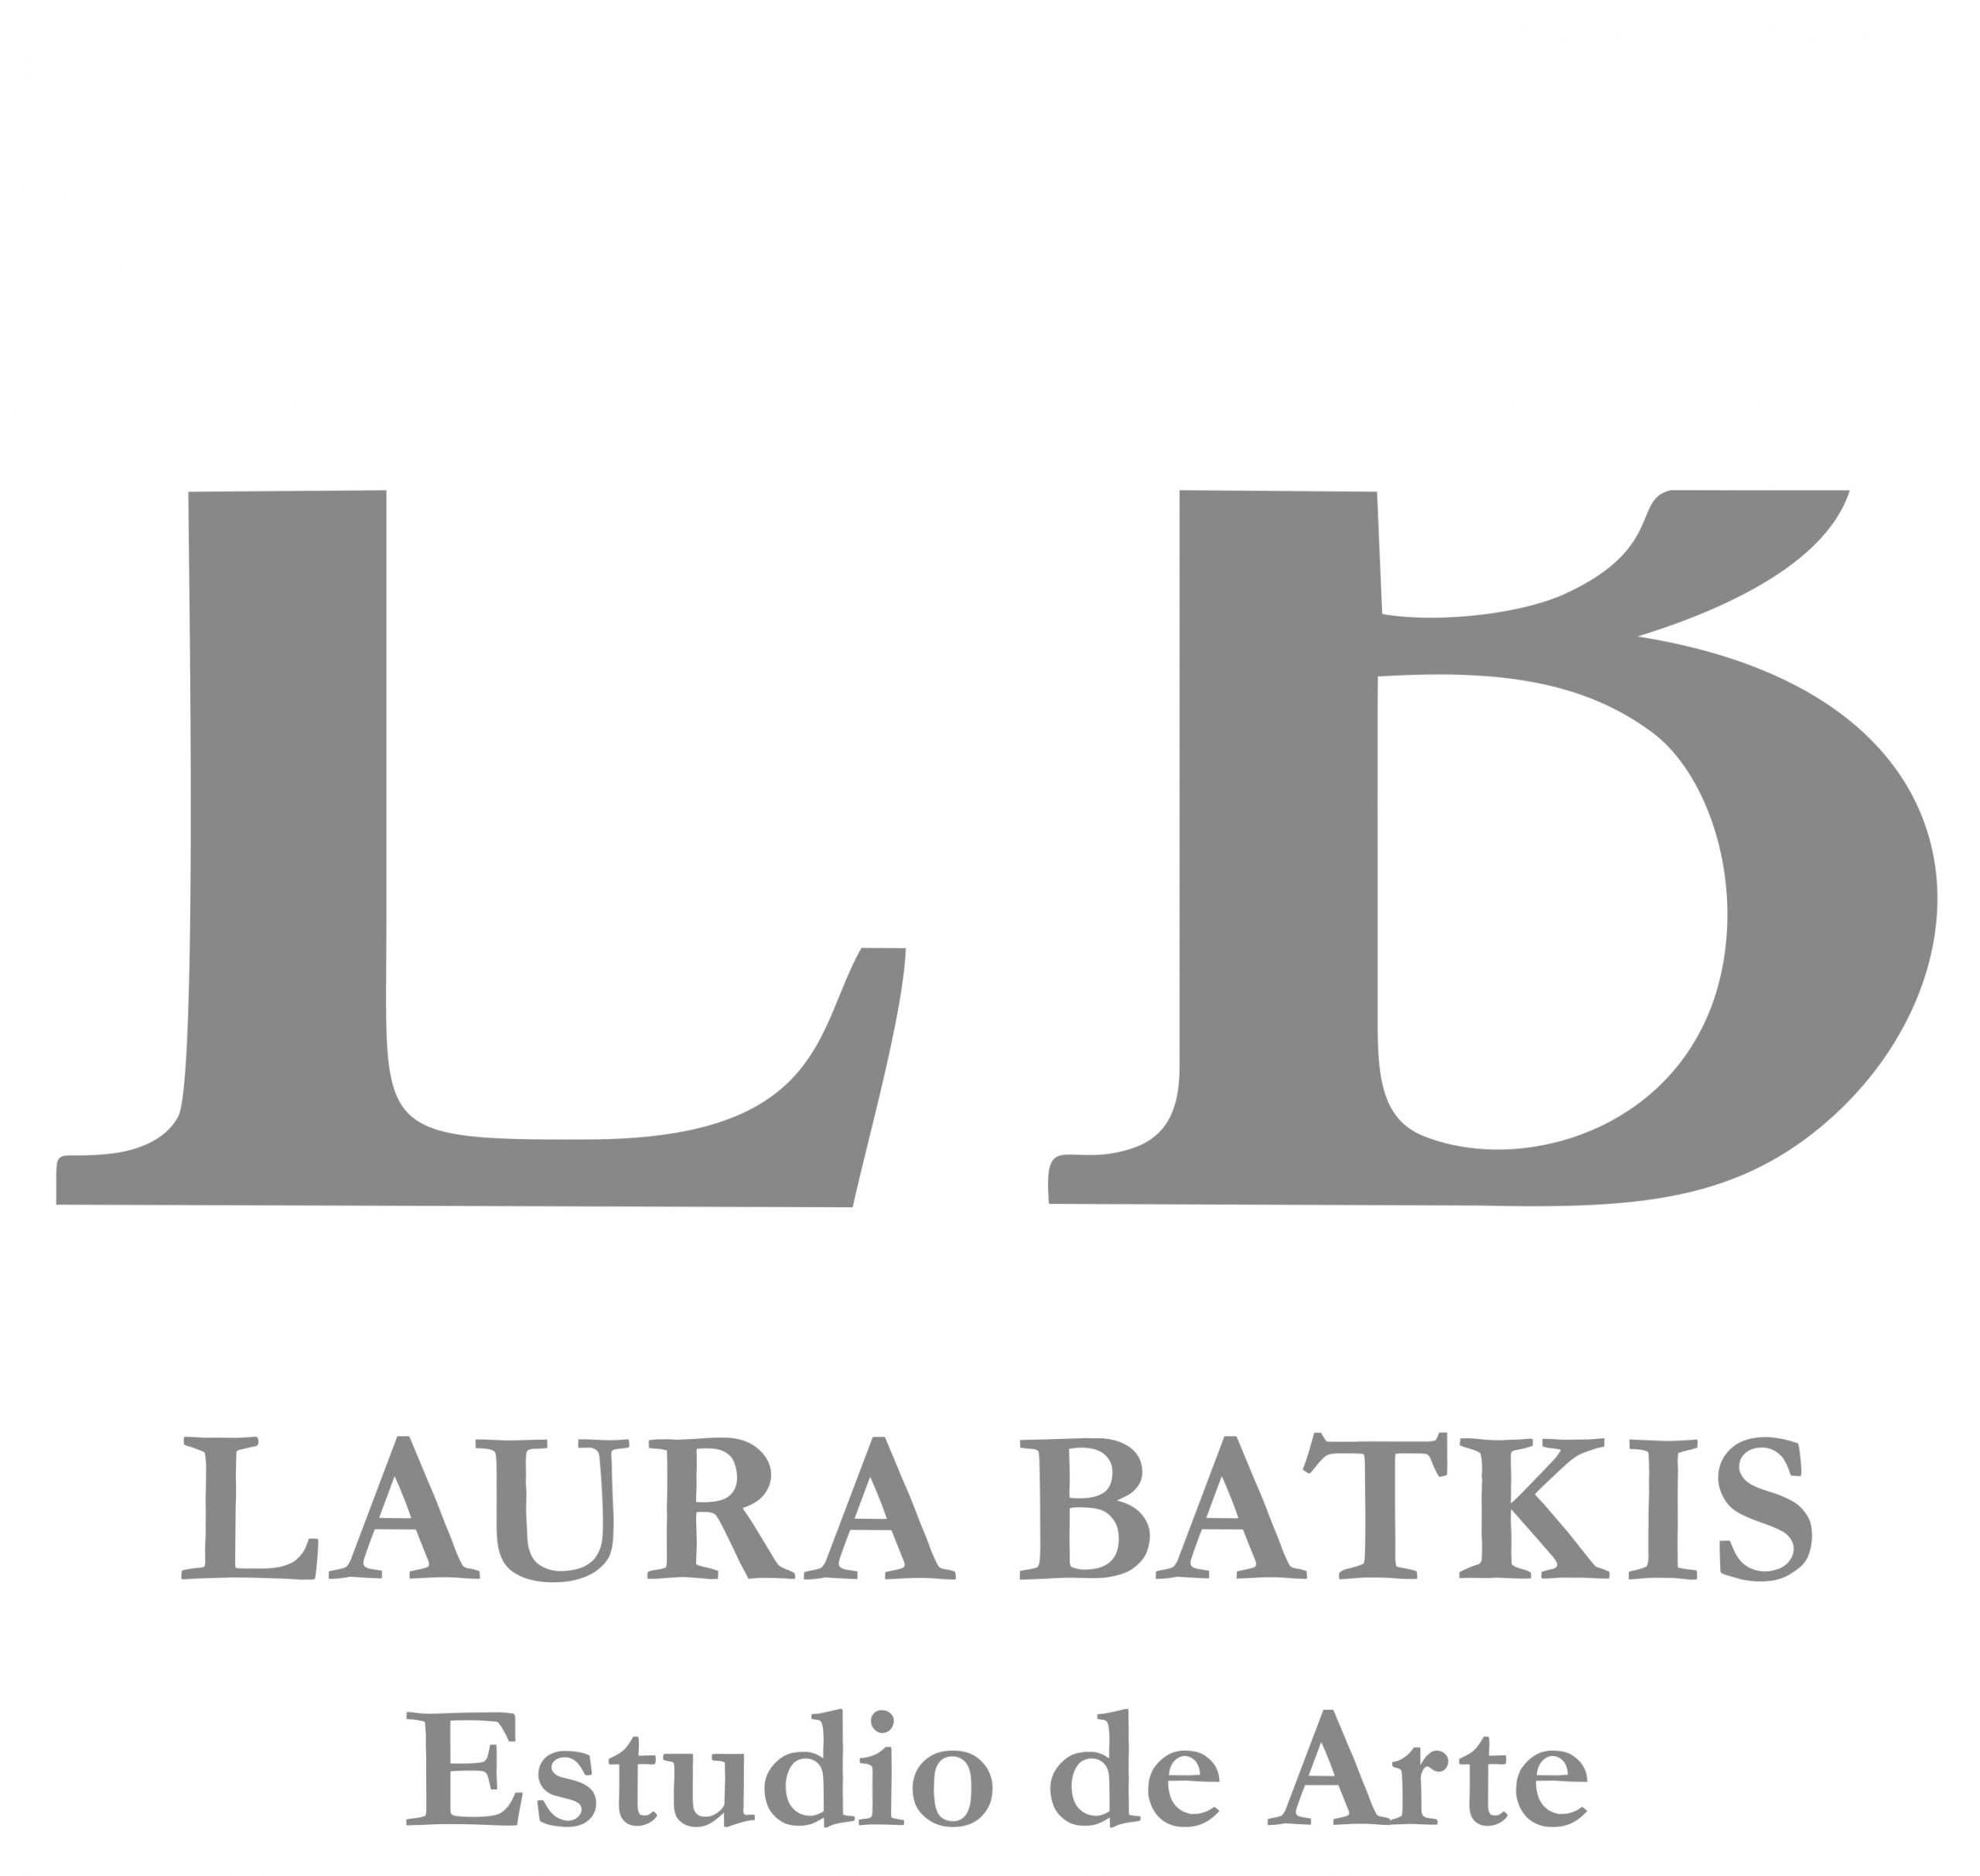 Laura Batkis